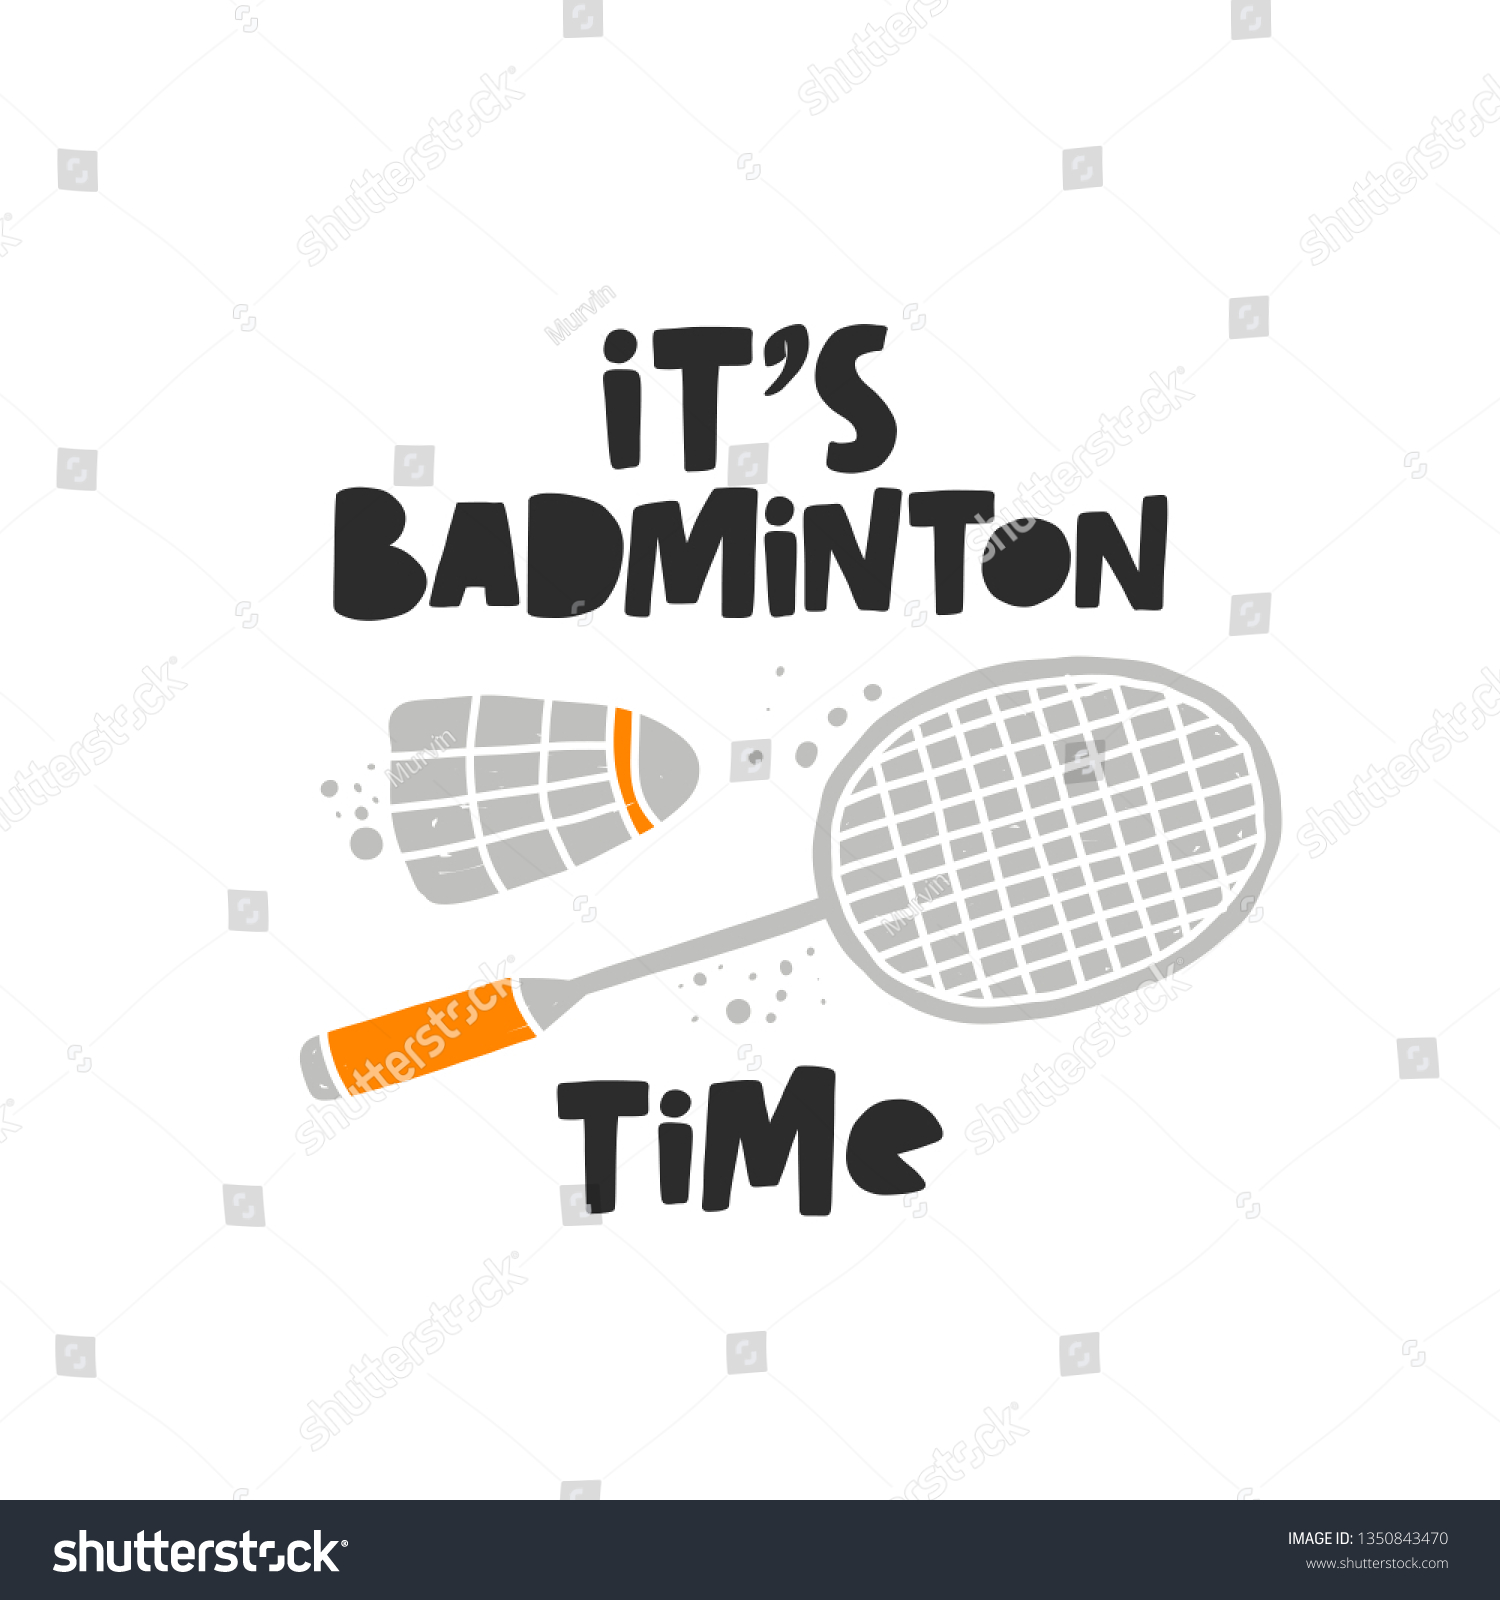 badminton game time